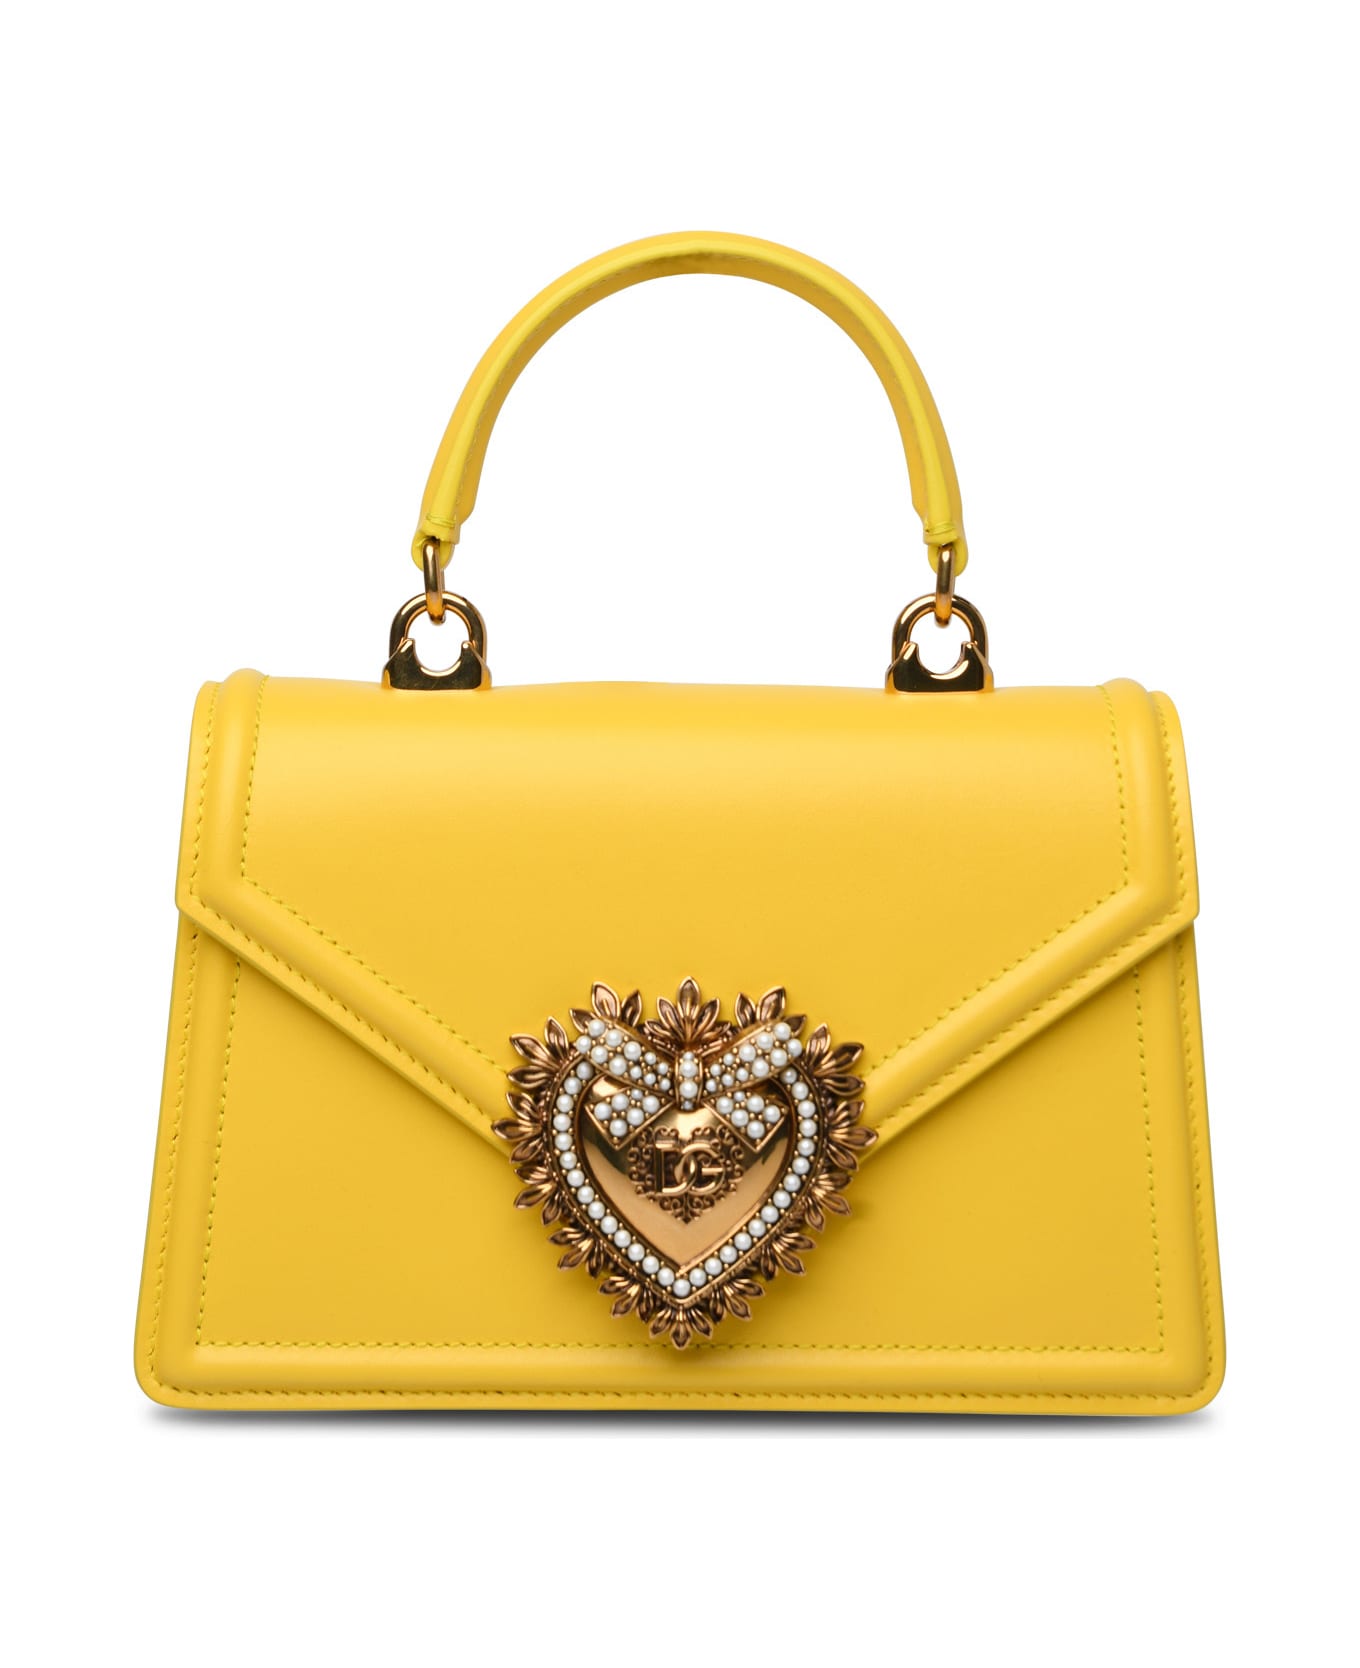 Dolce & Gabbana Devotion Bag Shoulder Bag - Yellow トートバッグ